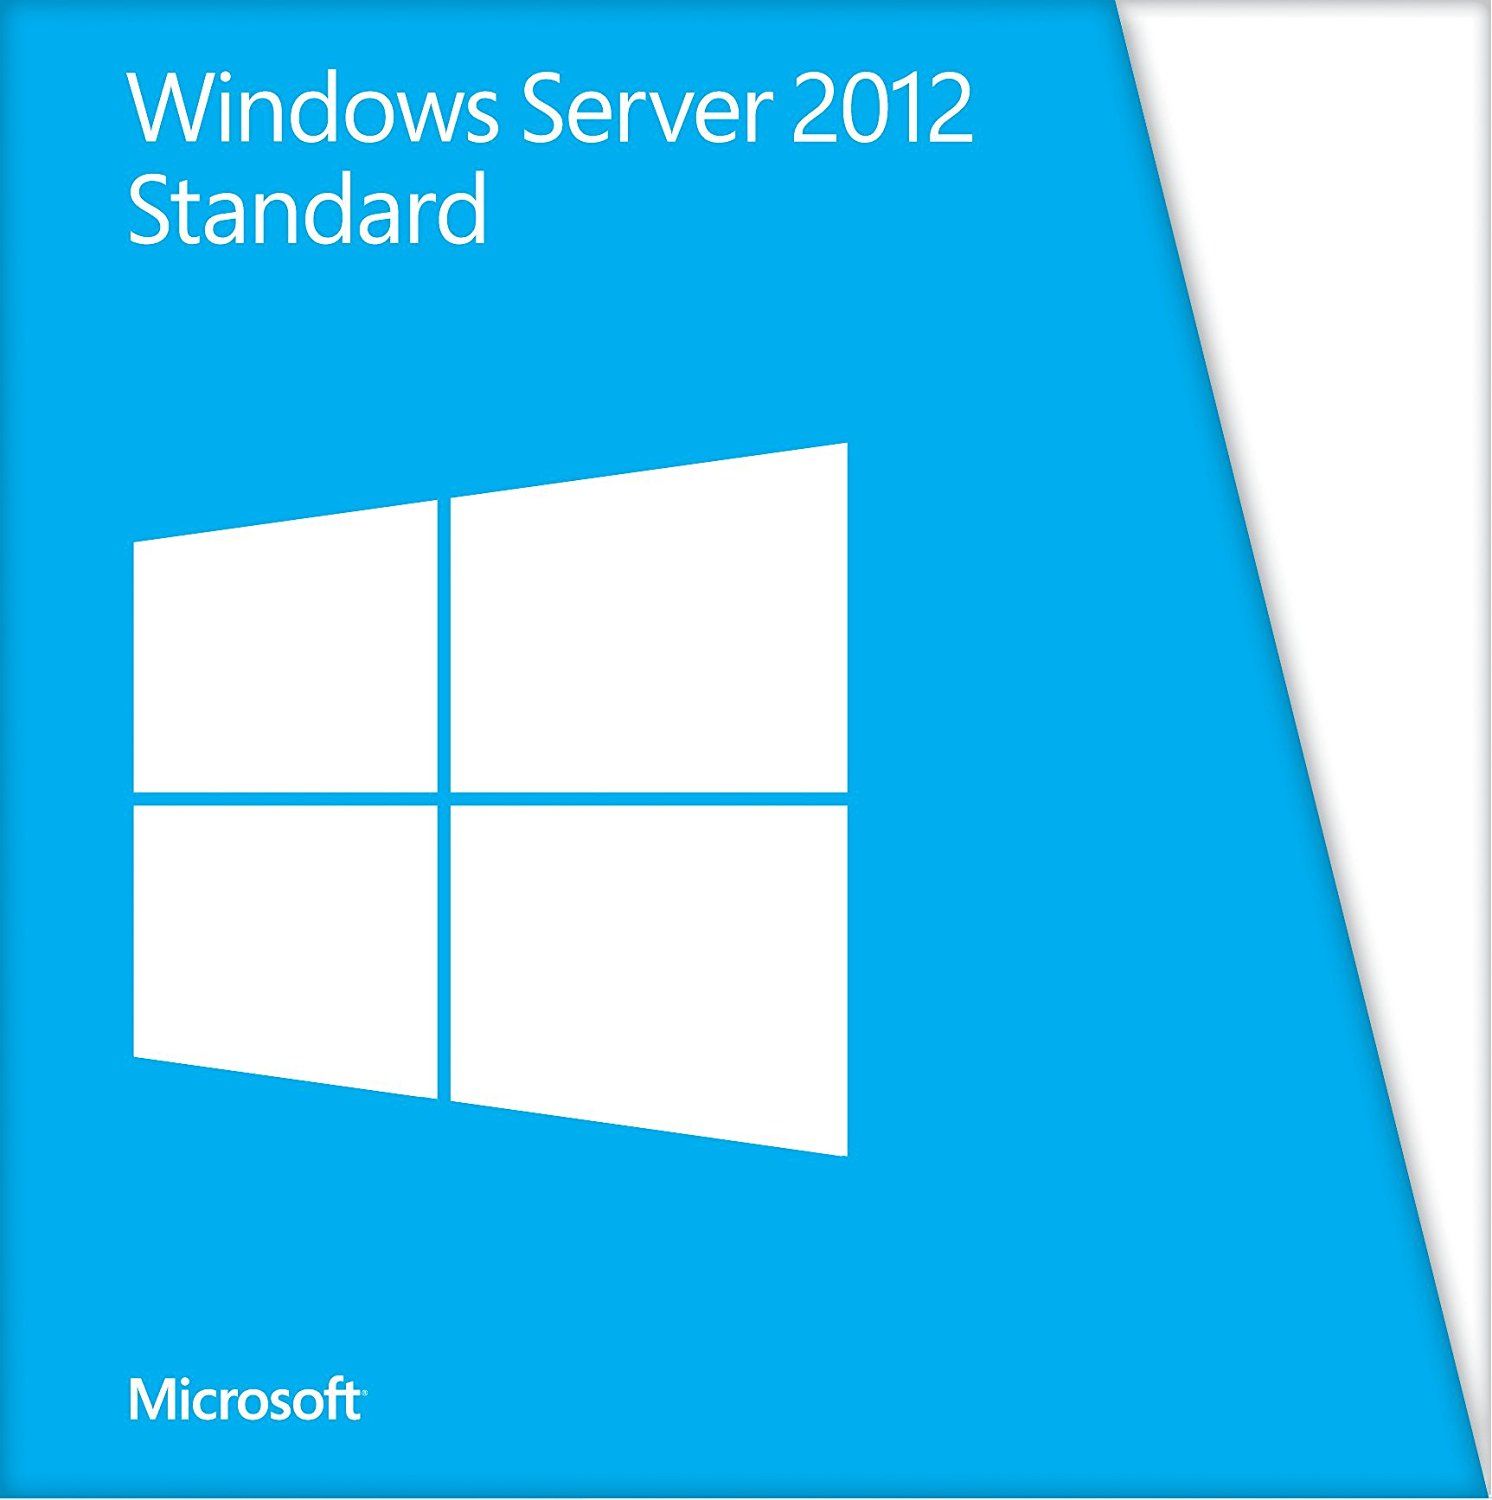 windows server 2012 r2 serial